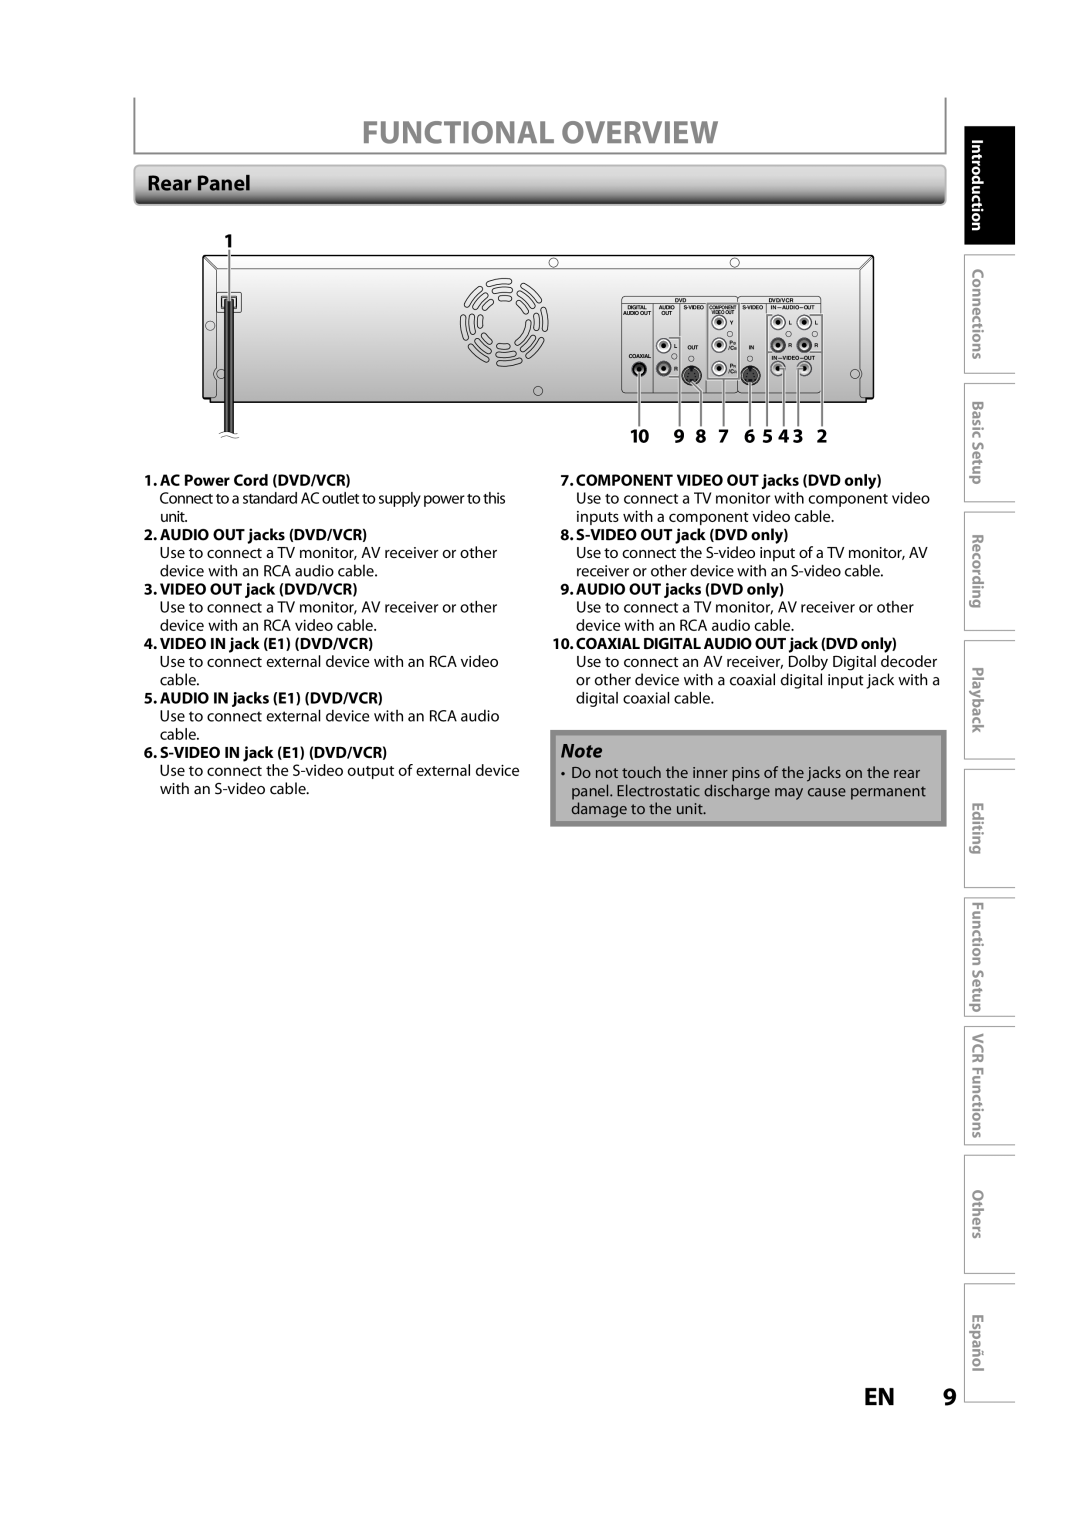 FUNAI BZV420MW8 Functional Overview, Rear Panel, 10 9 8 7 6 5 4 3, Introduction Connections Basic Setup, Español 